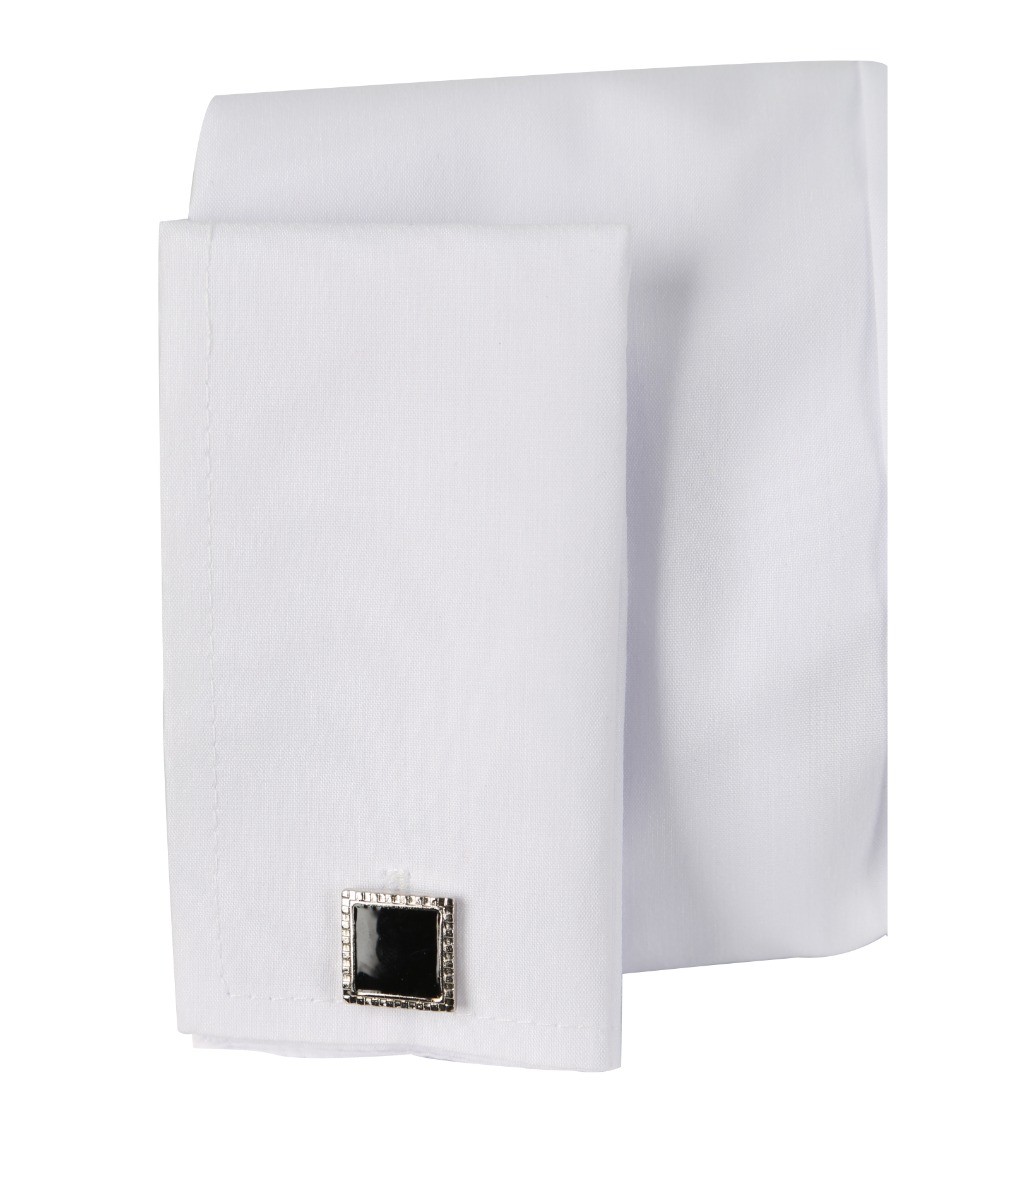 Boys Wing Collar White Cufflink Shirt - White